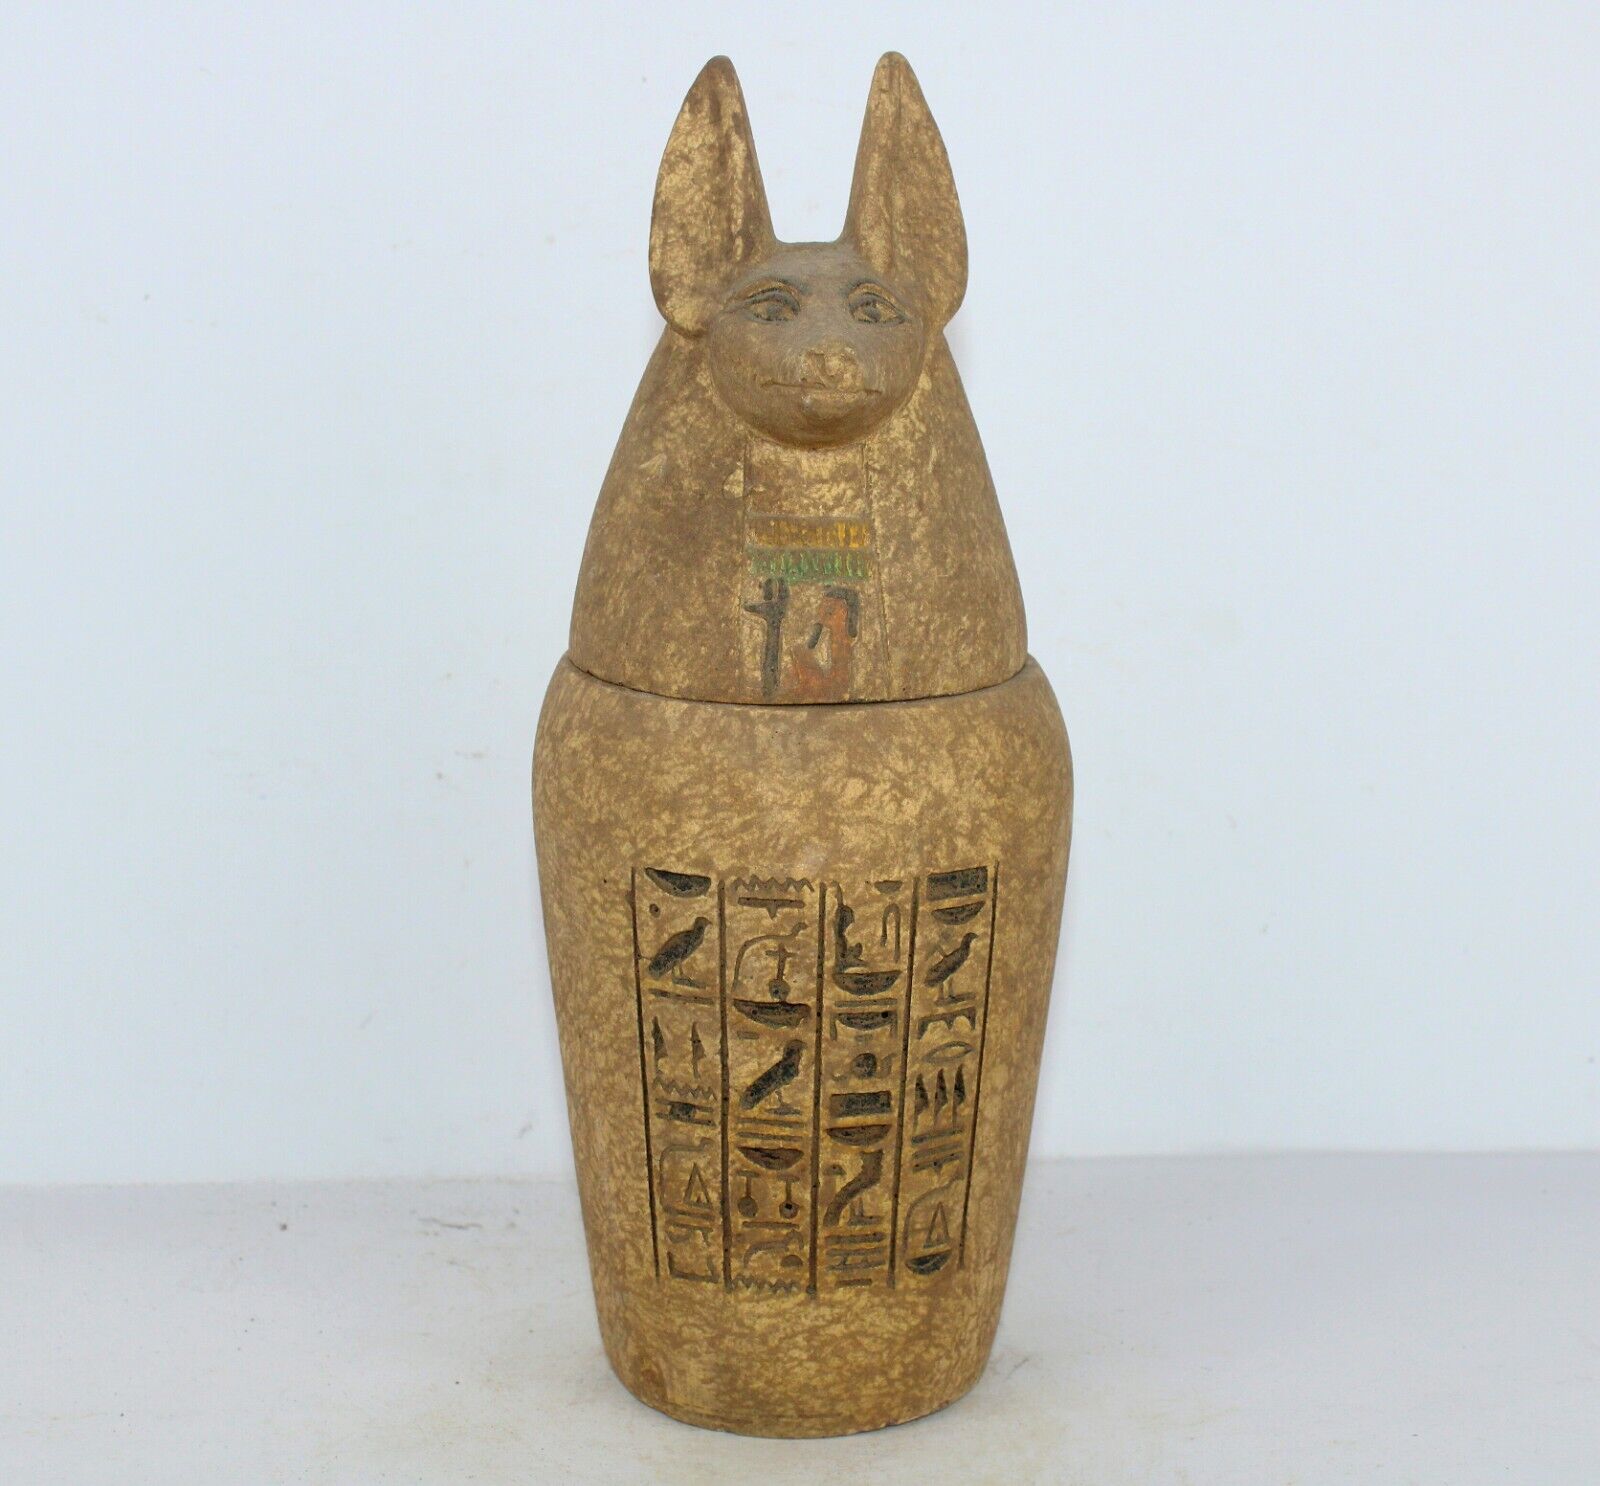 Rare Ancient Egyptian Antique Anubis Canopic Jar Organs Storage Egyptology BC